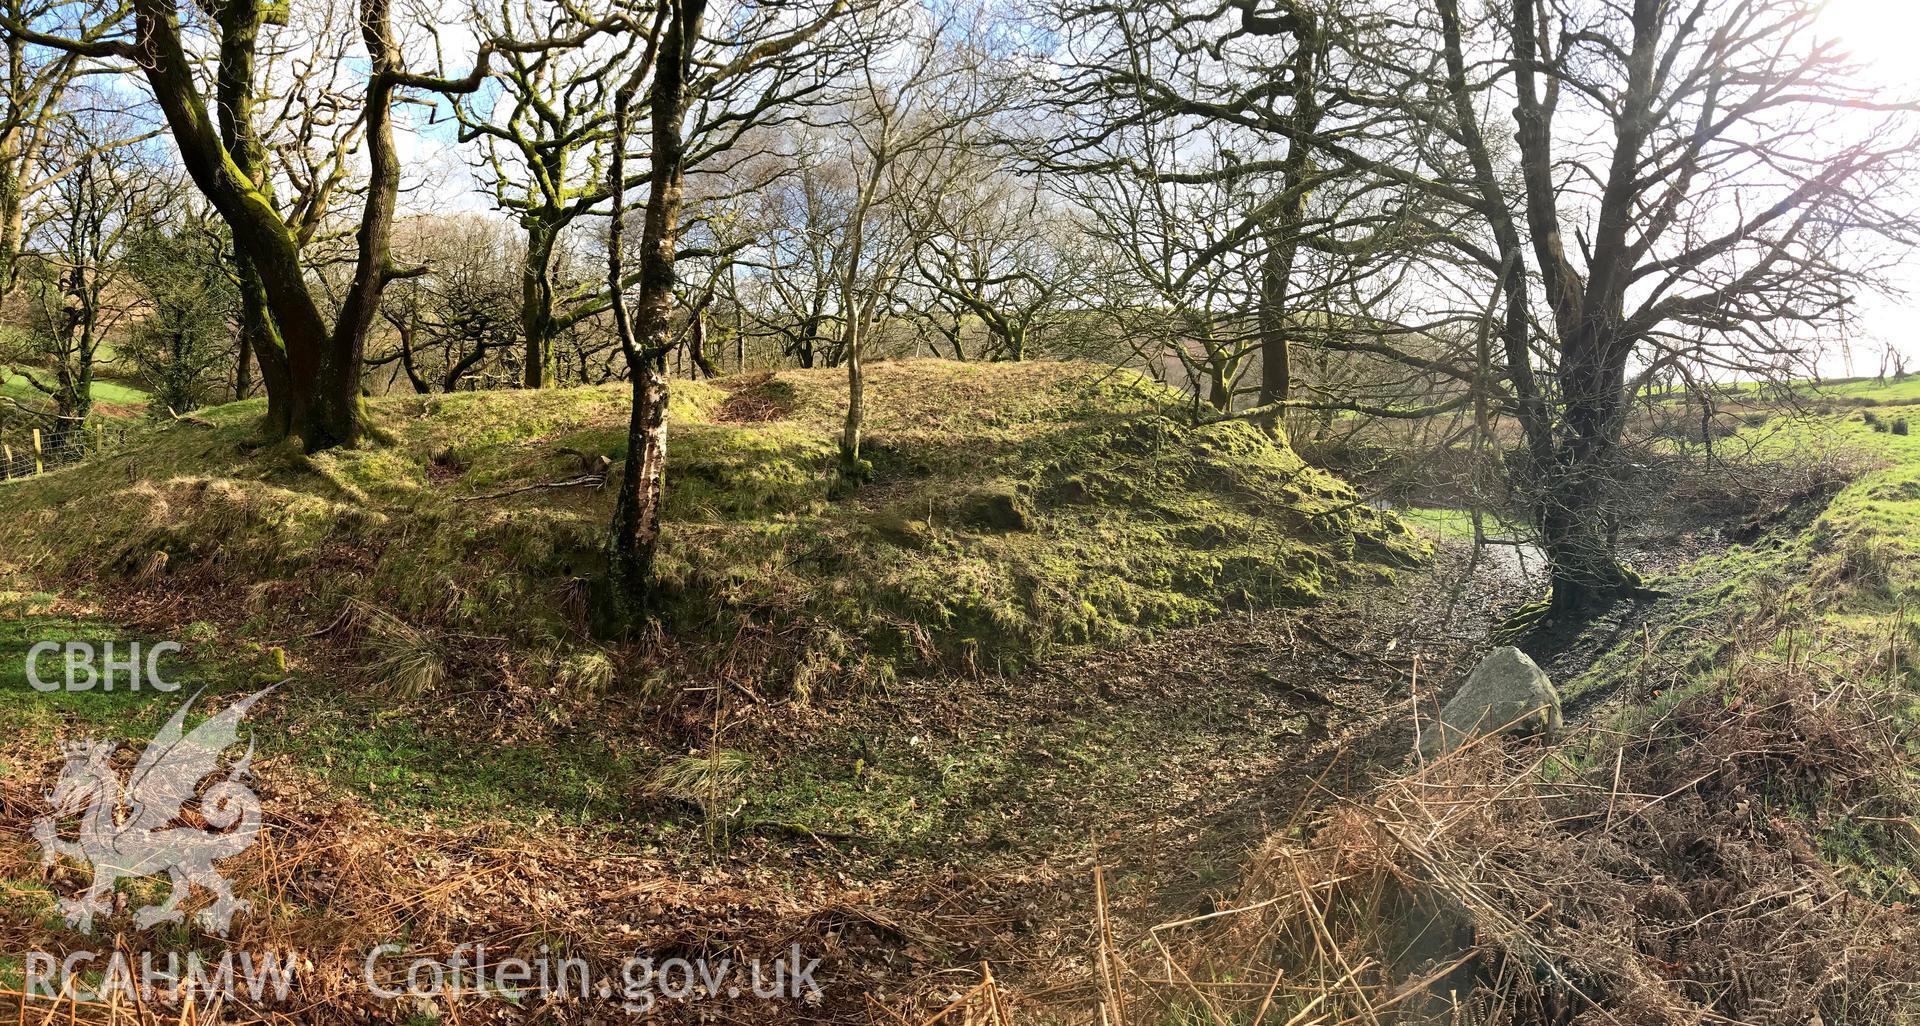 Colour photograph of Rhyndwclwydach medieval earthwork (Cae Castell), north west of Pontardawe, taken by Paul R. Davis on 12th March 2019.